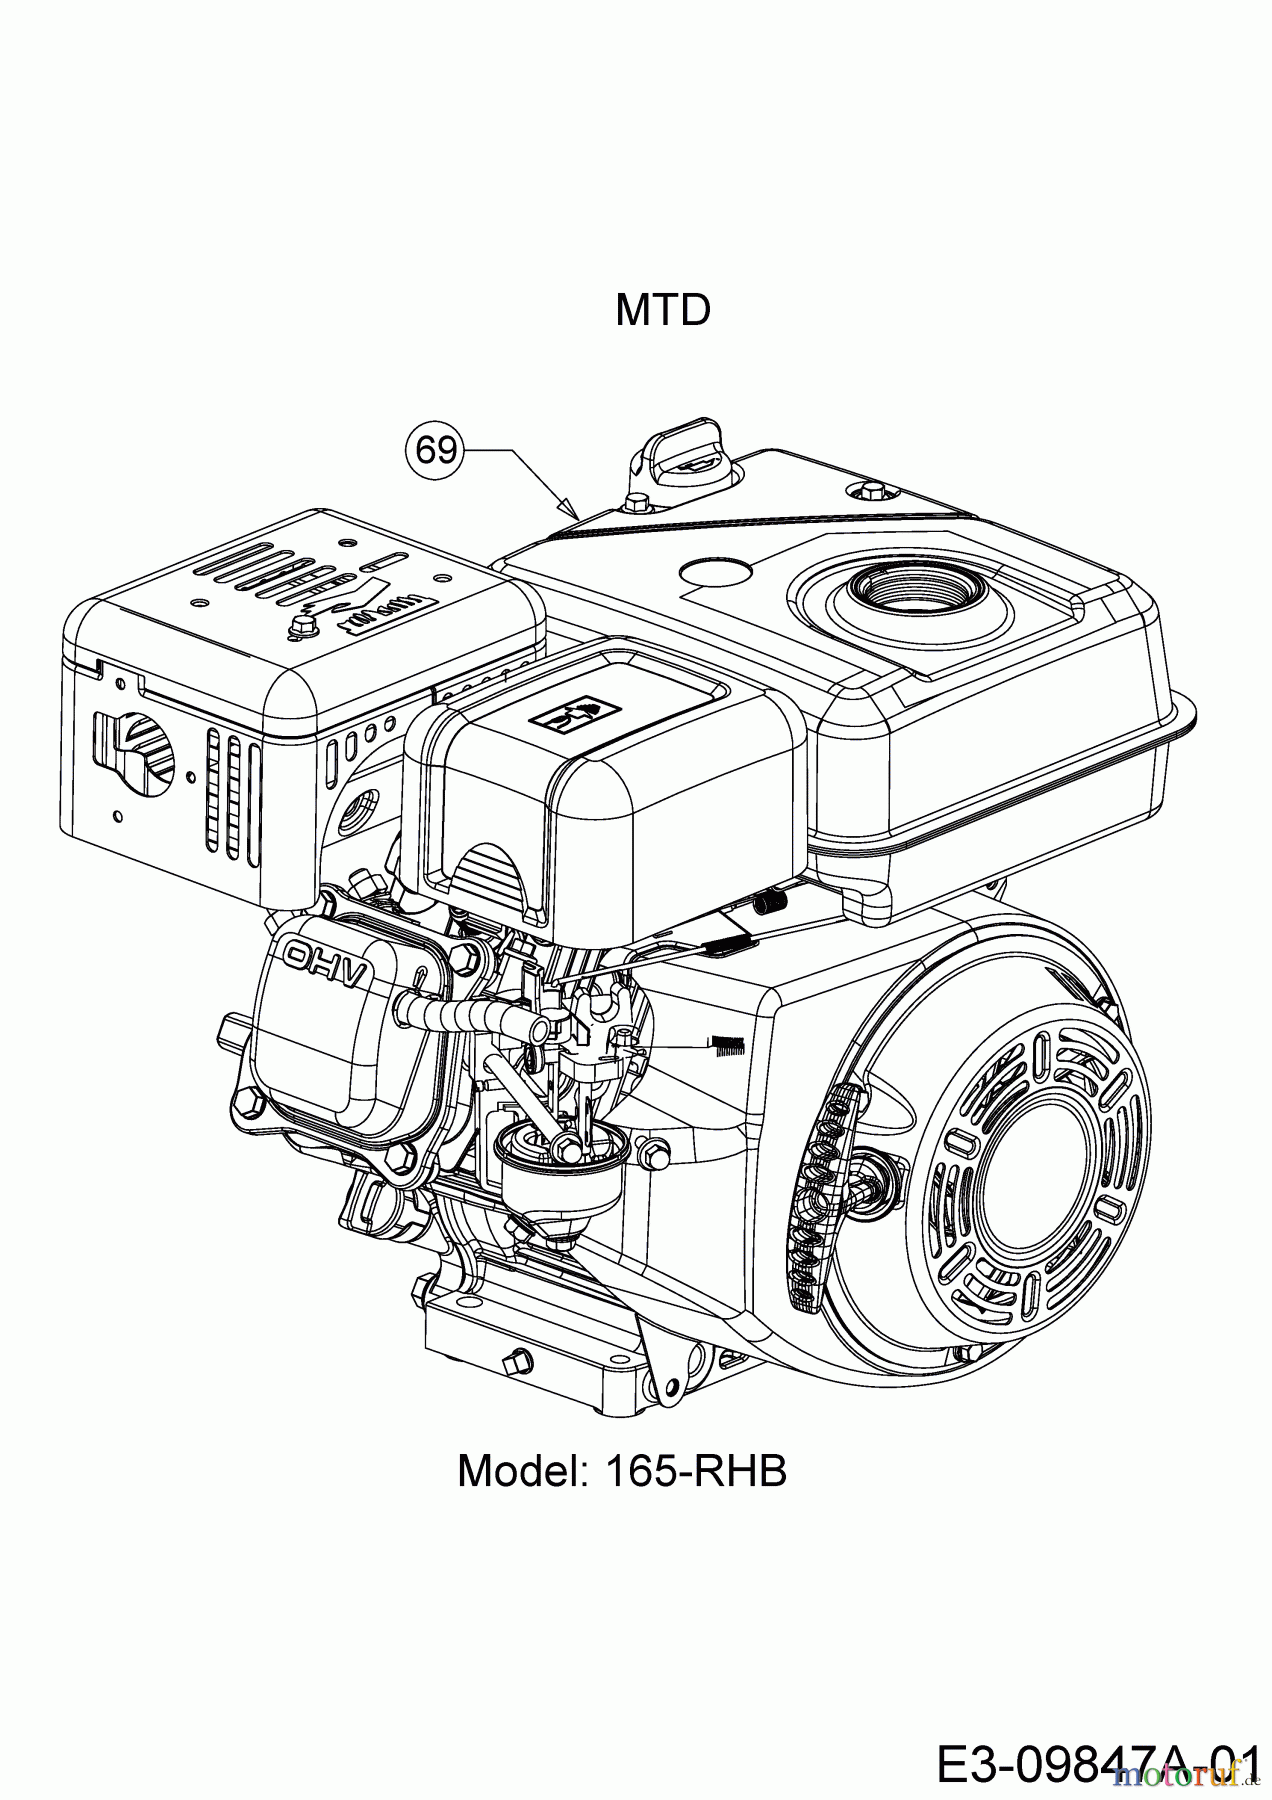  MTD Tillers T/380 M 21D-38MT678  (2017) Engine MTD